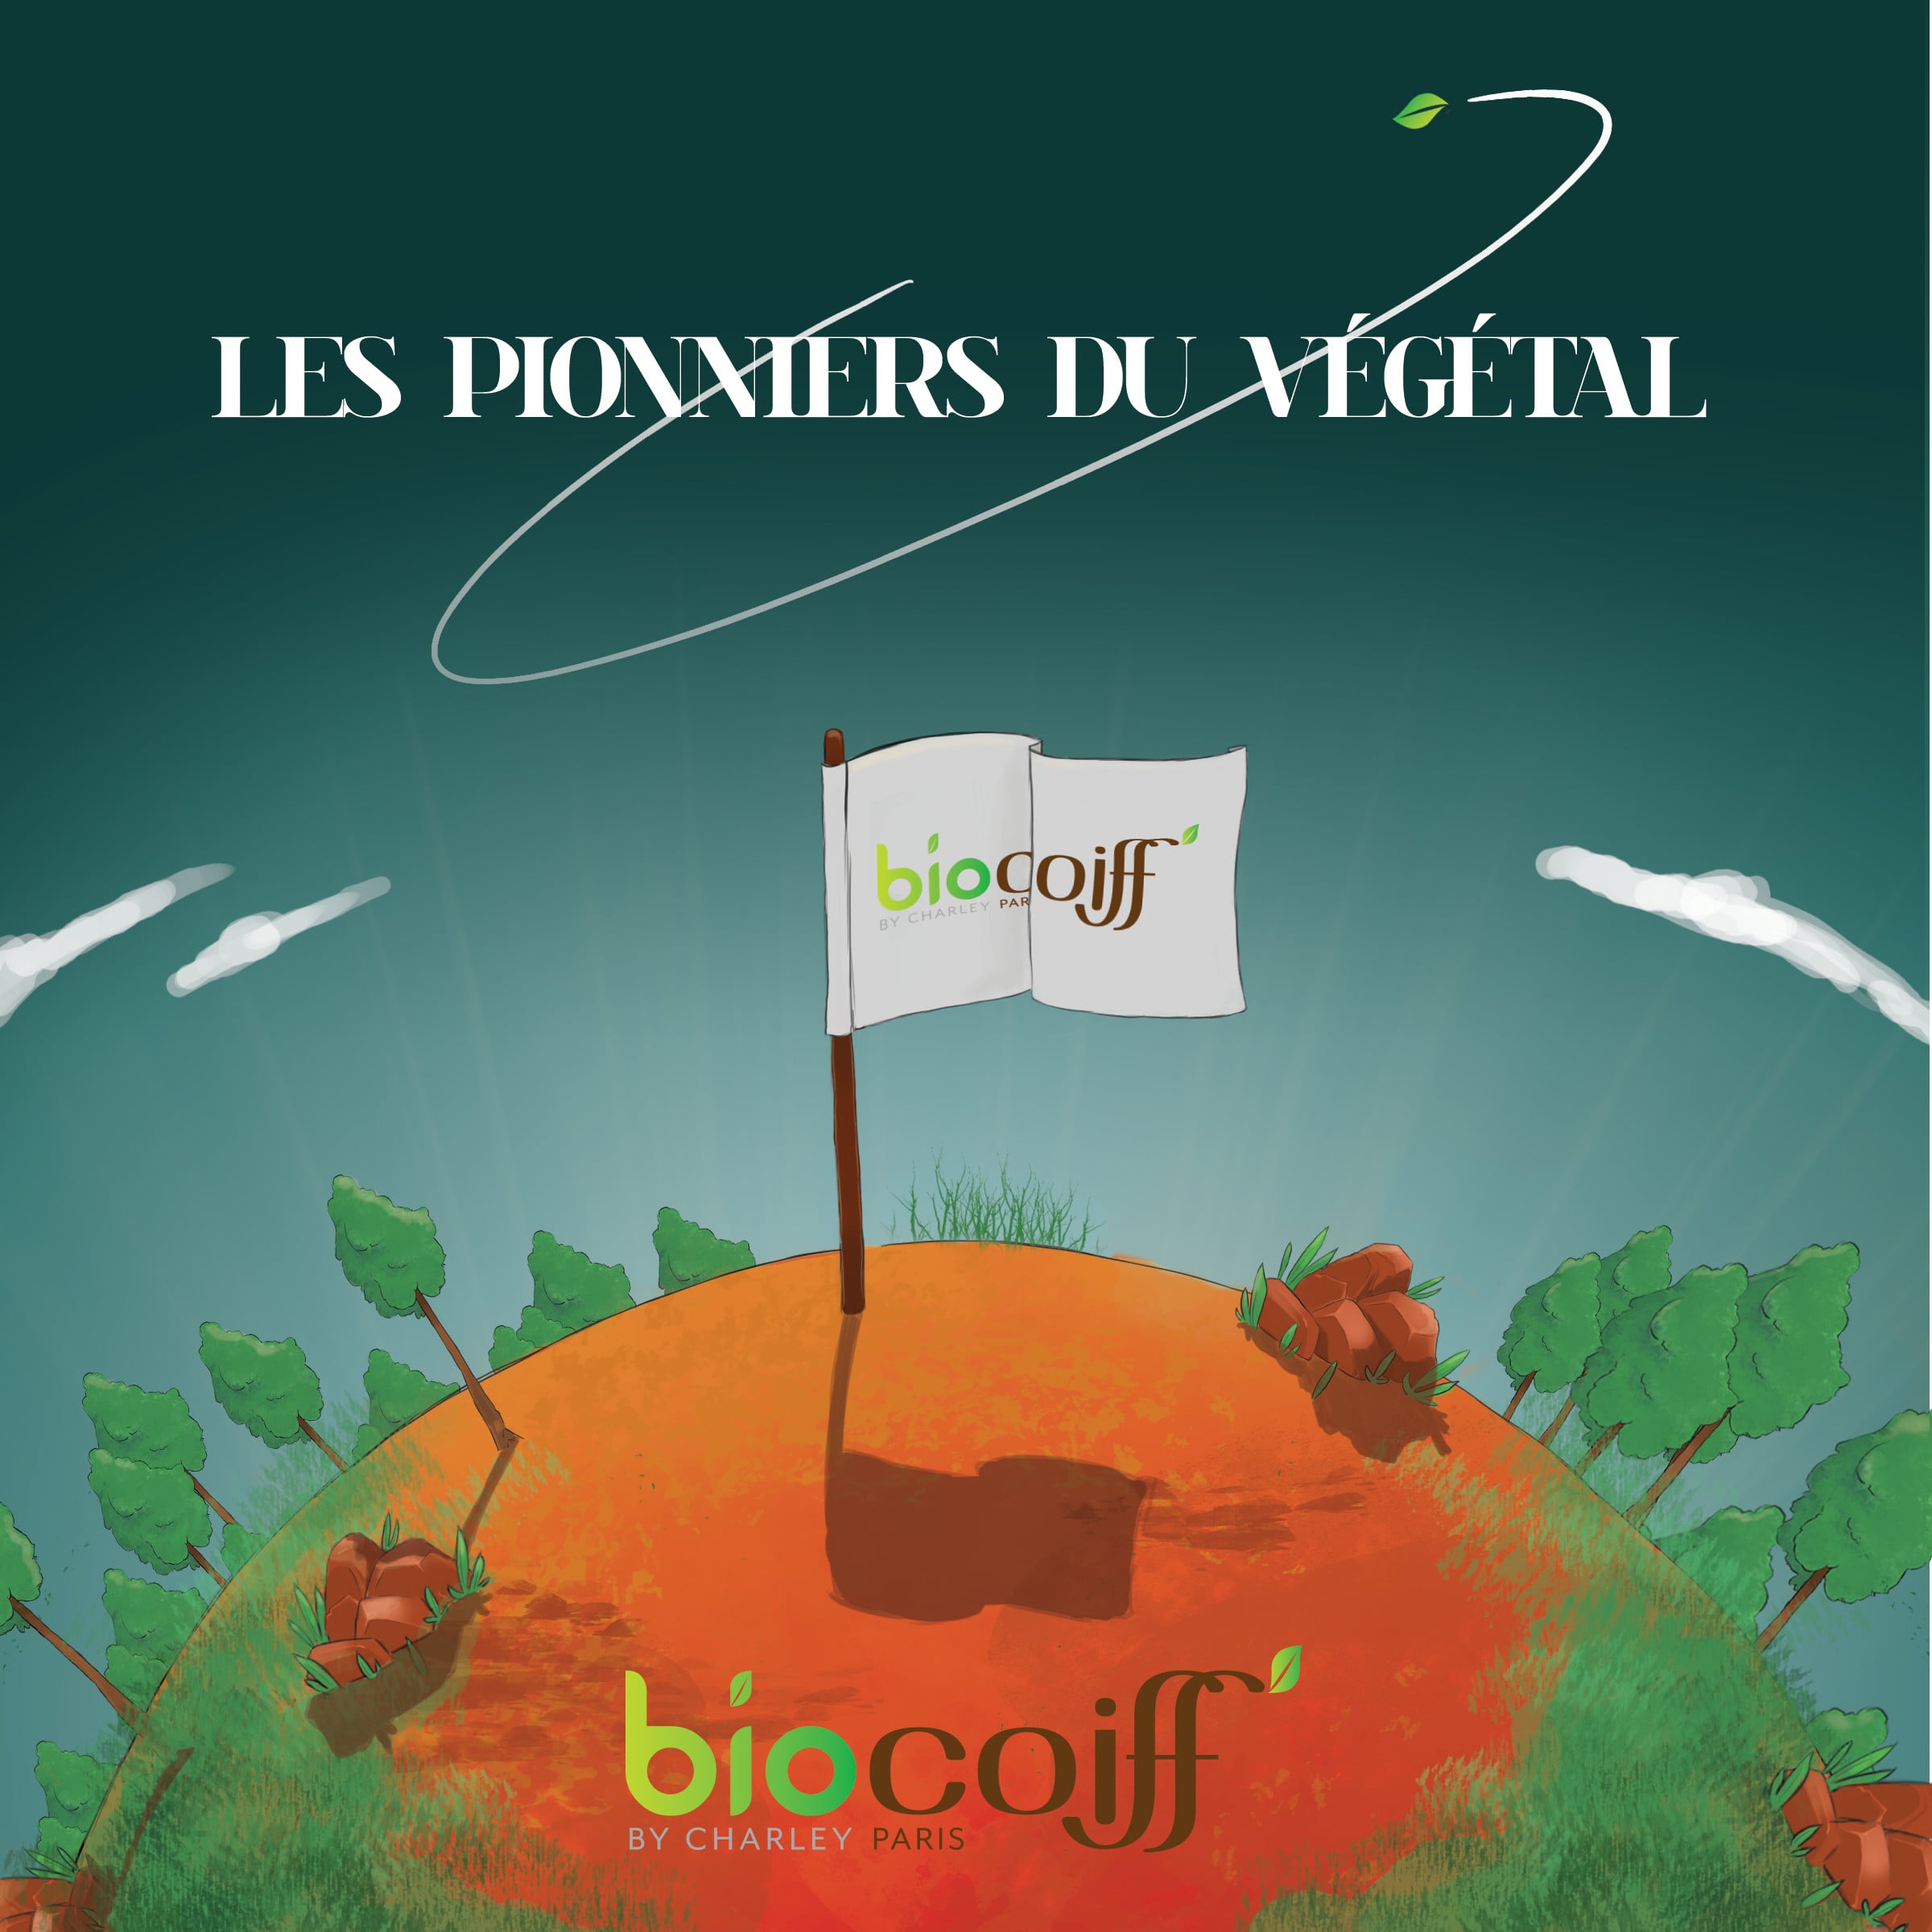 Biocoiff' illustration